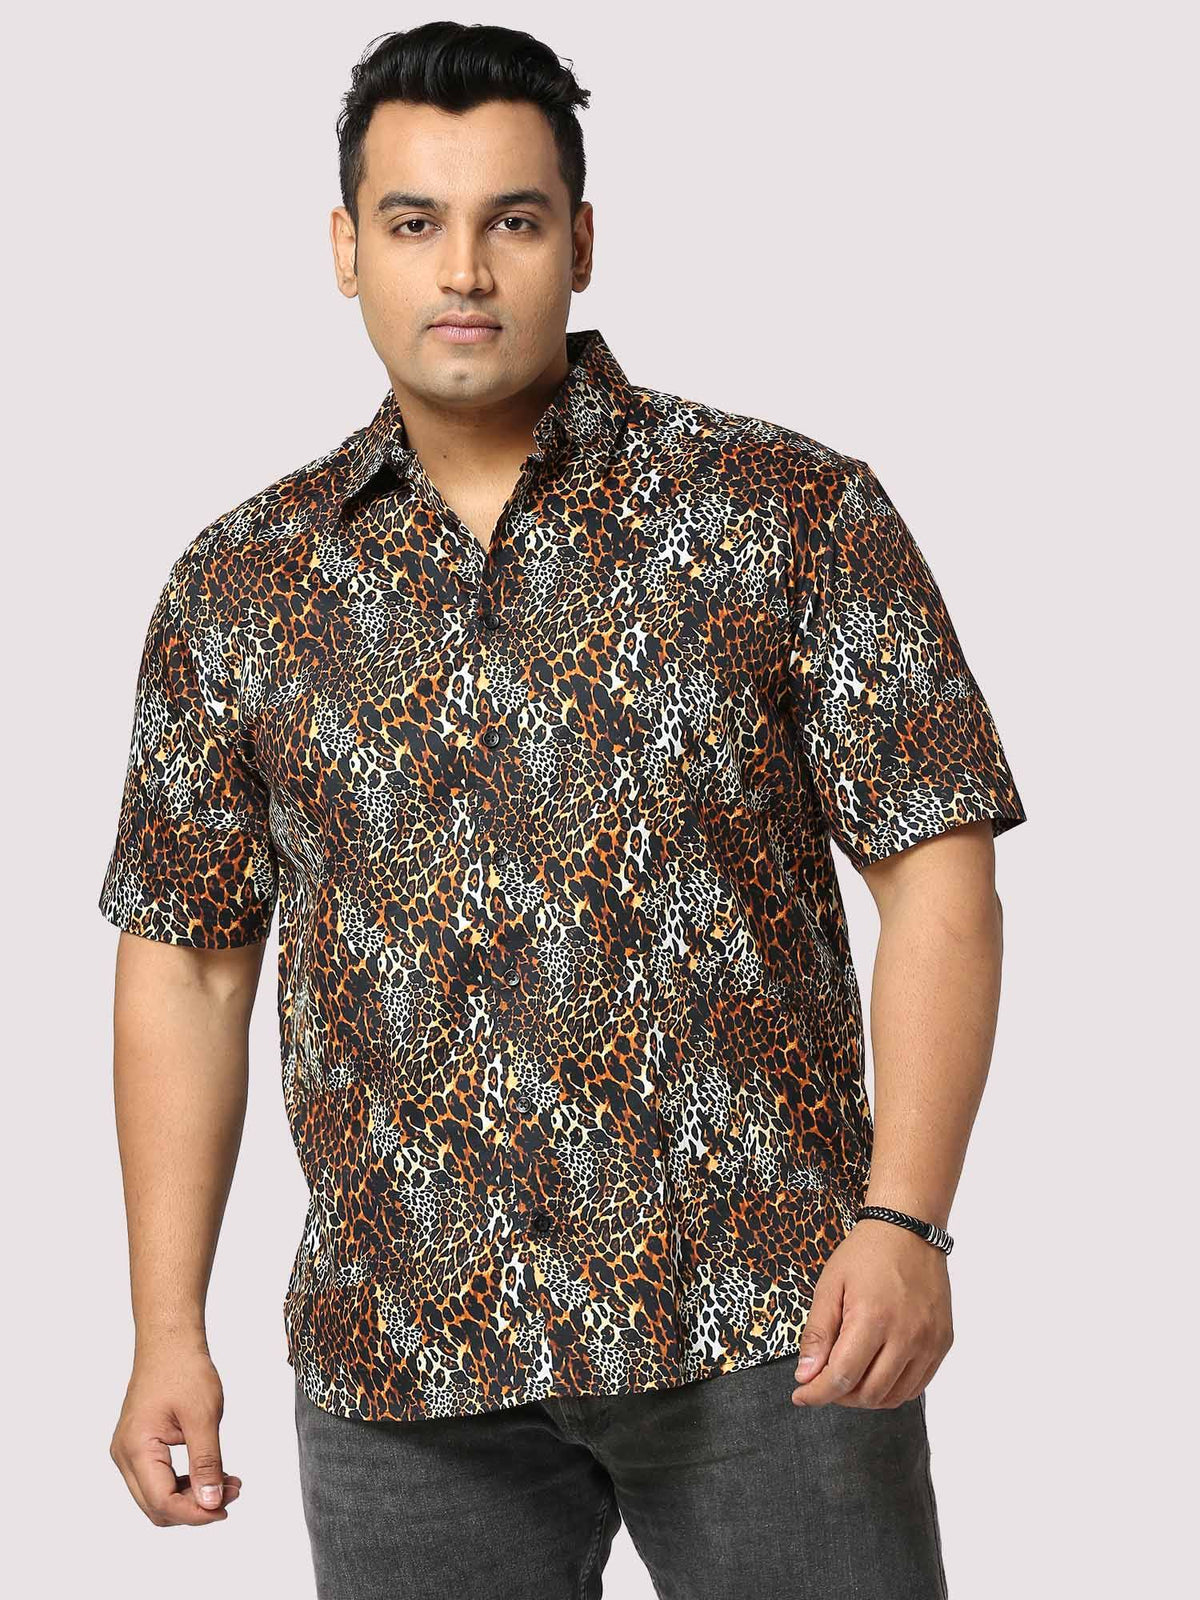 Roar Digital Printed Half Shirt Men's Plus Size - Guniaa Fashions